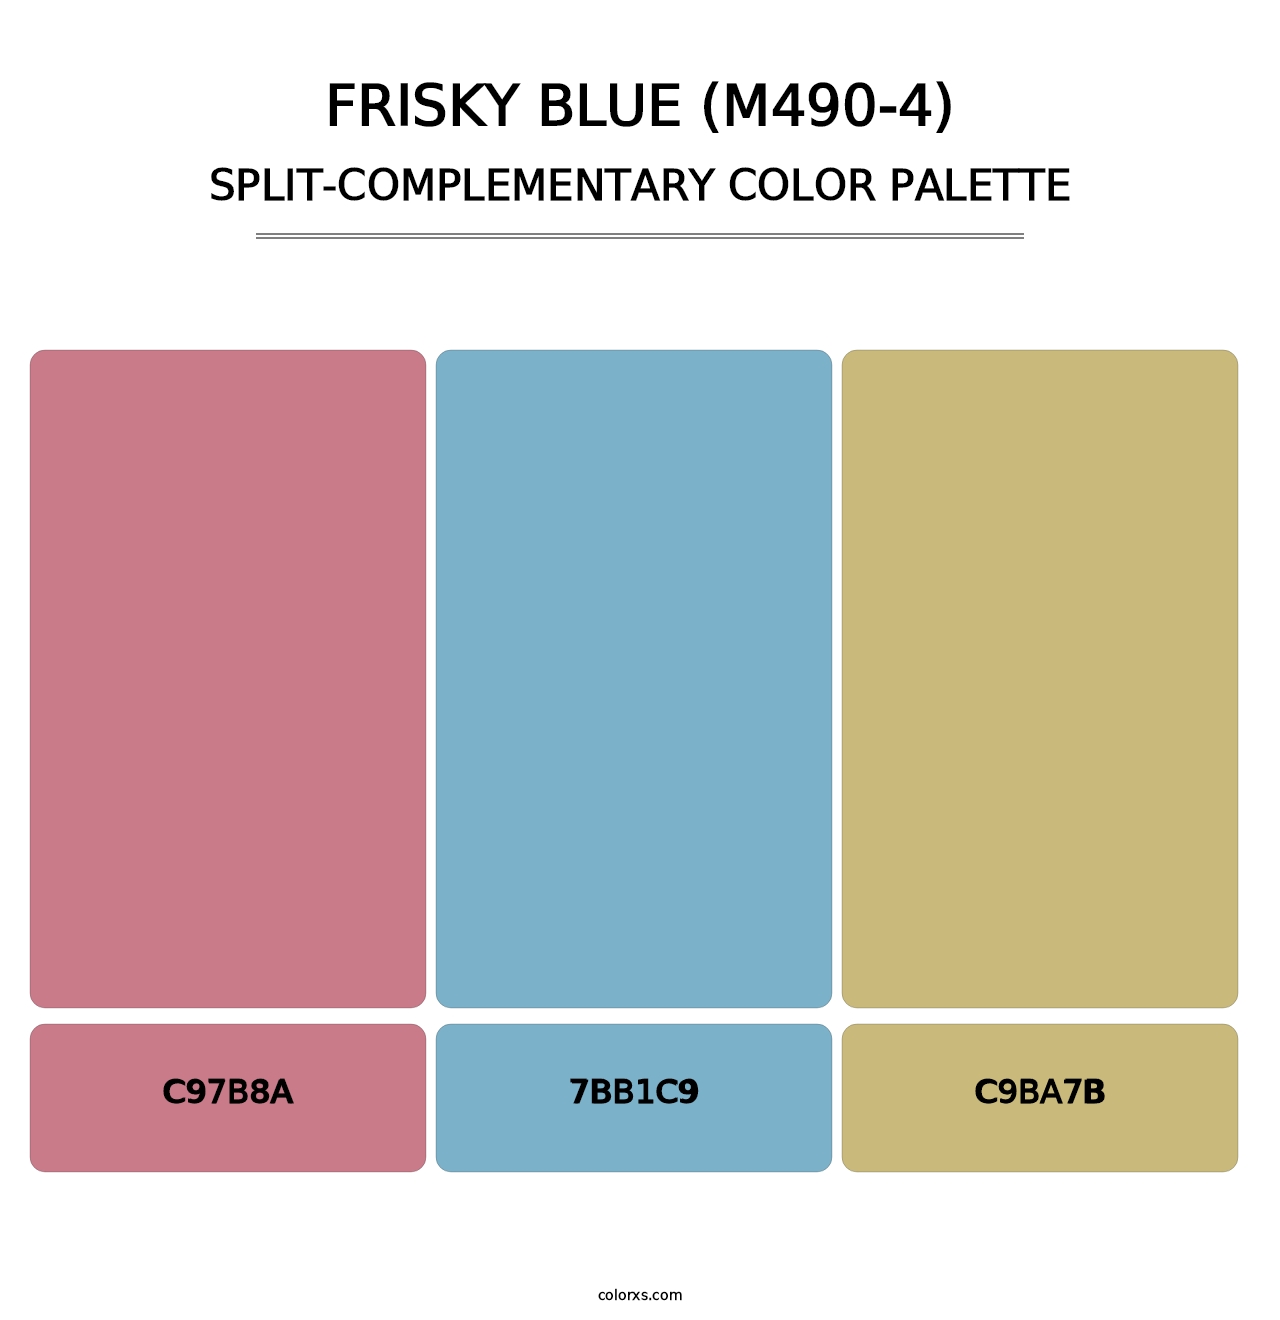 Frisky Blue (M490-4) - Split-Complementary Color Palette